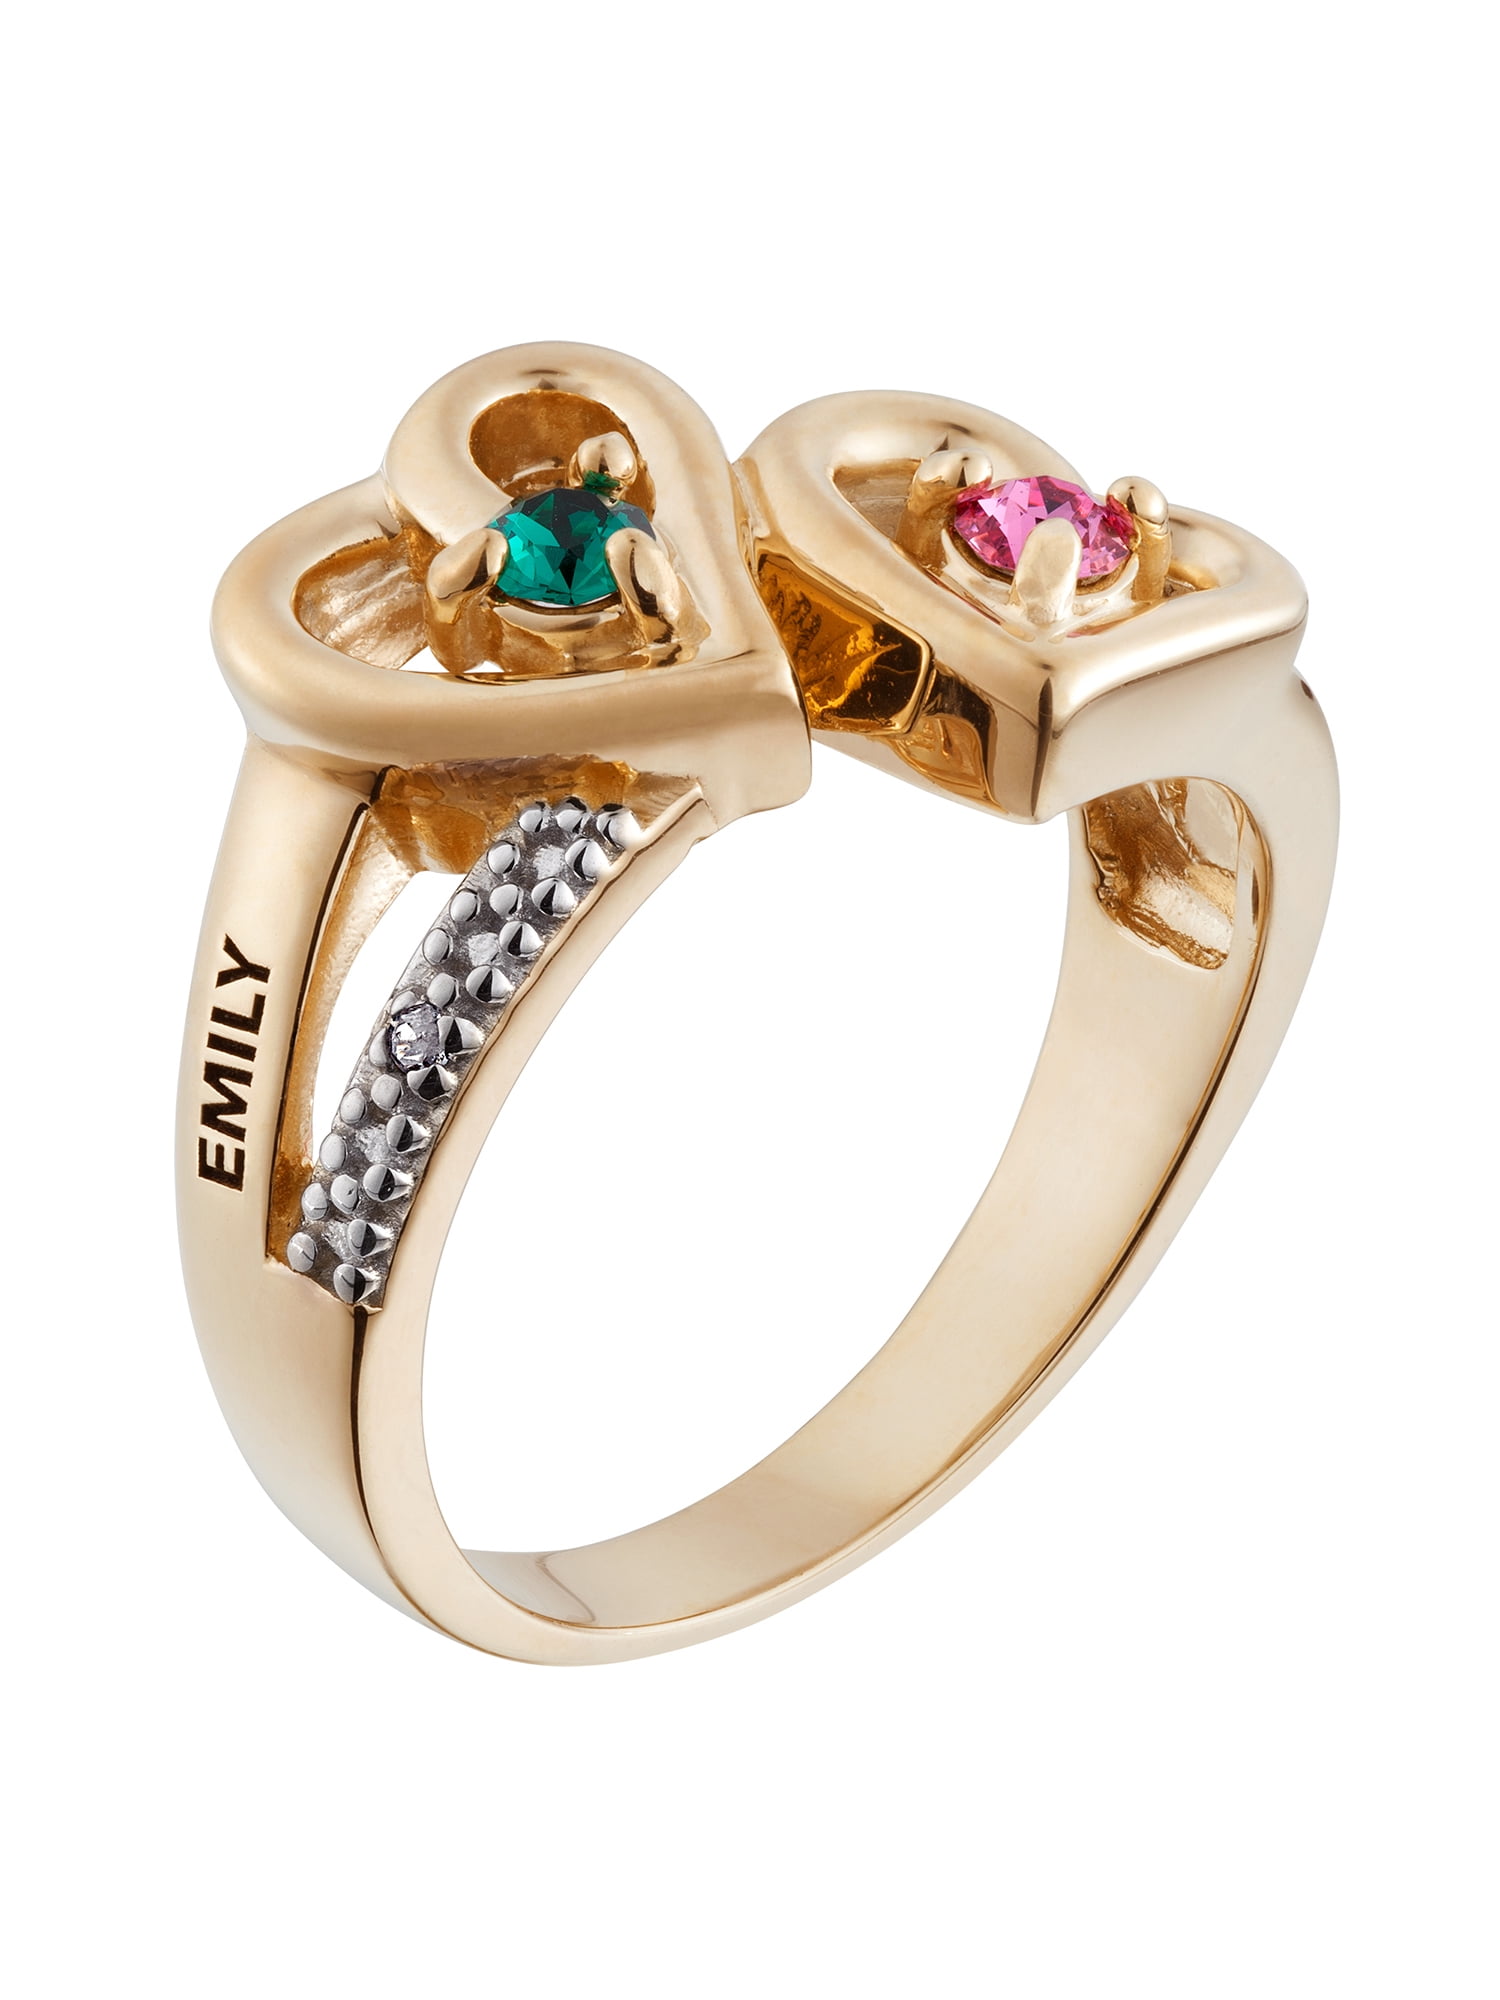 Silver Ring For Women's | Rising Star Design Ring | Silveradda